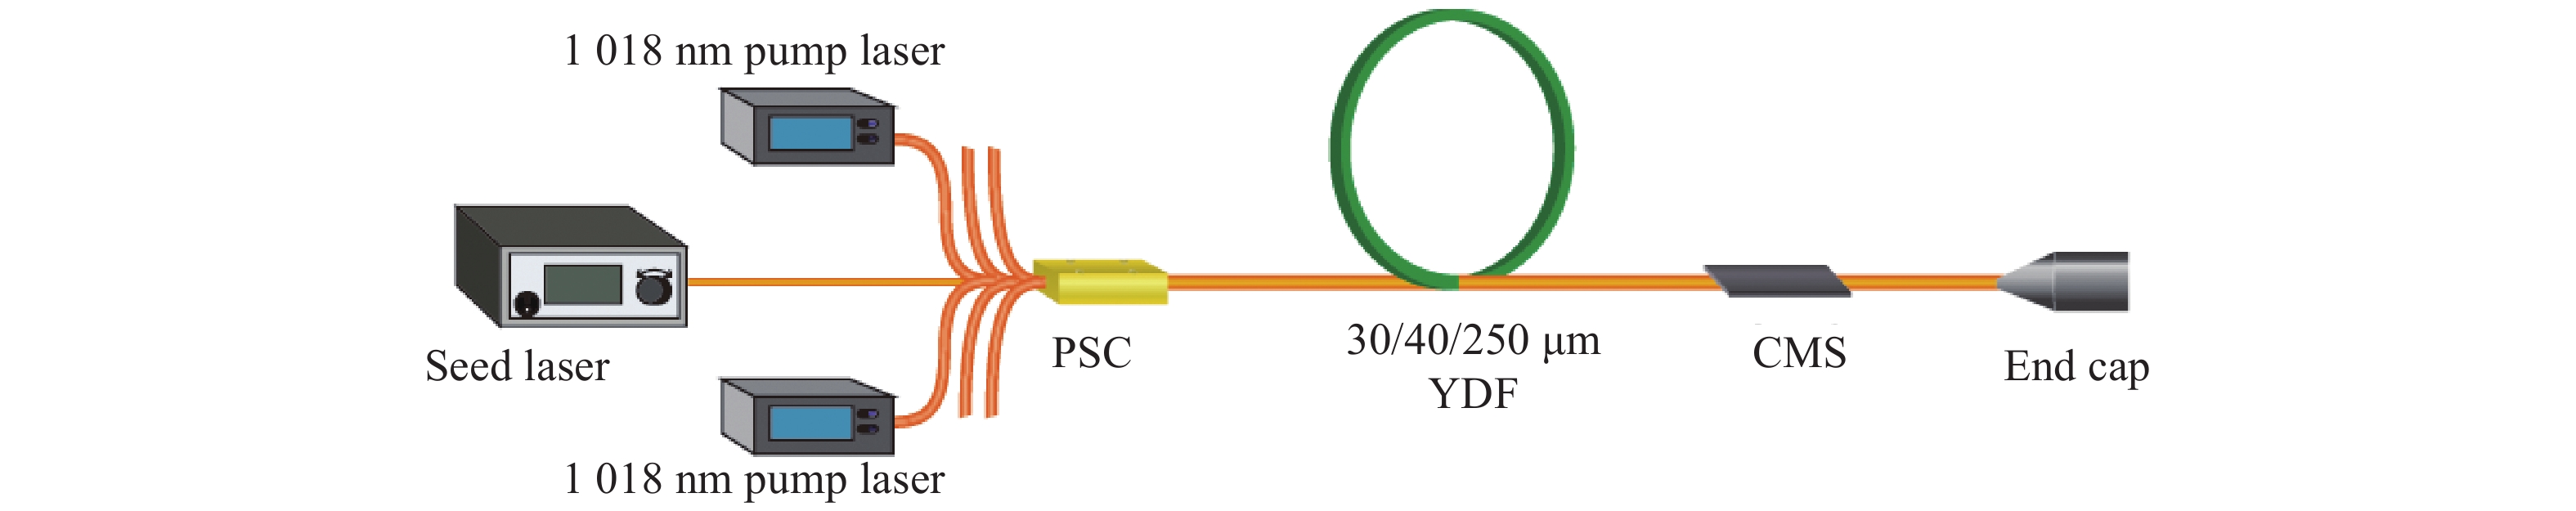 Experimental setup of the confined-doped fiber amplifier (PSC: pump and signal combiner; YDF: ytterbium-doped fiber; CMS: cladding mode stripper)